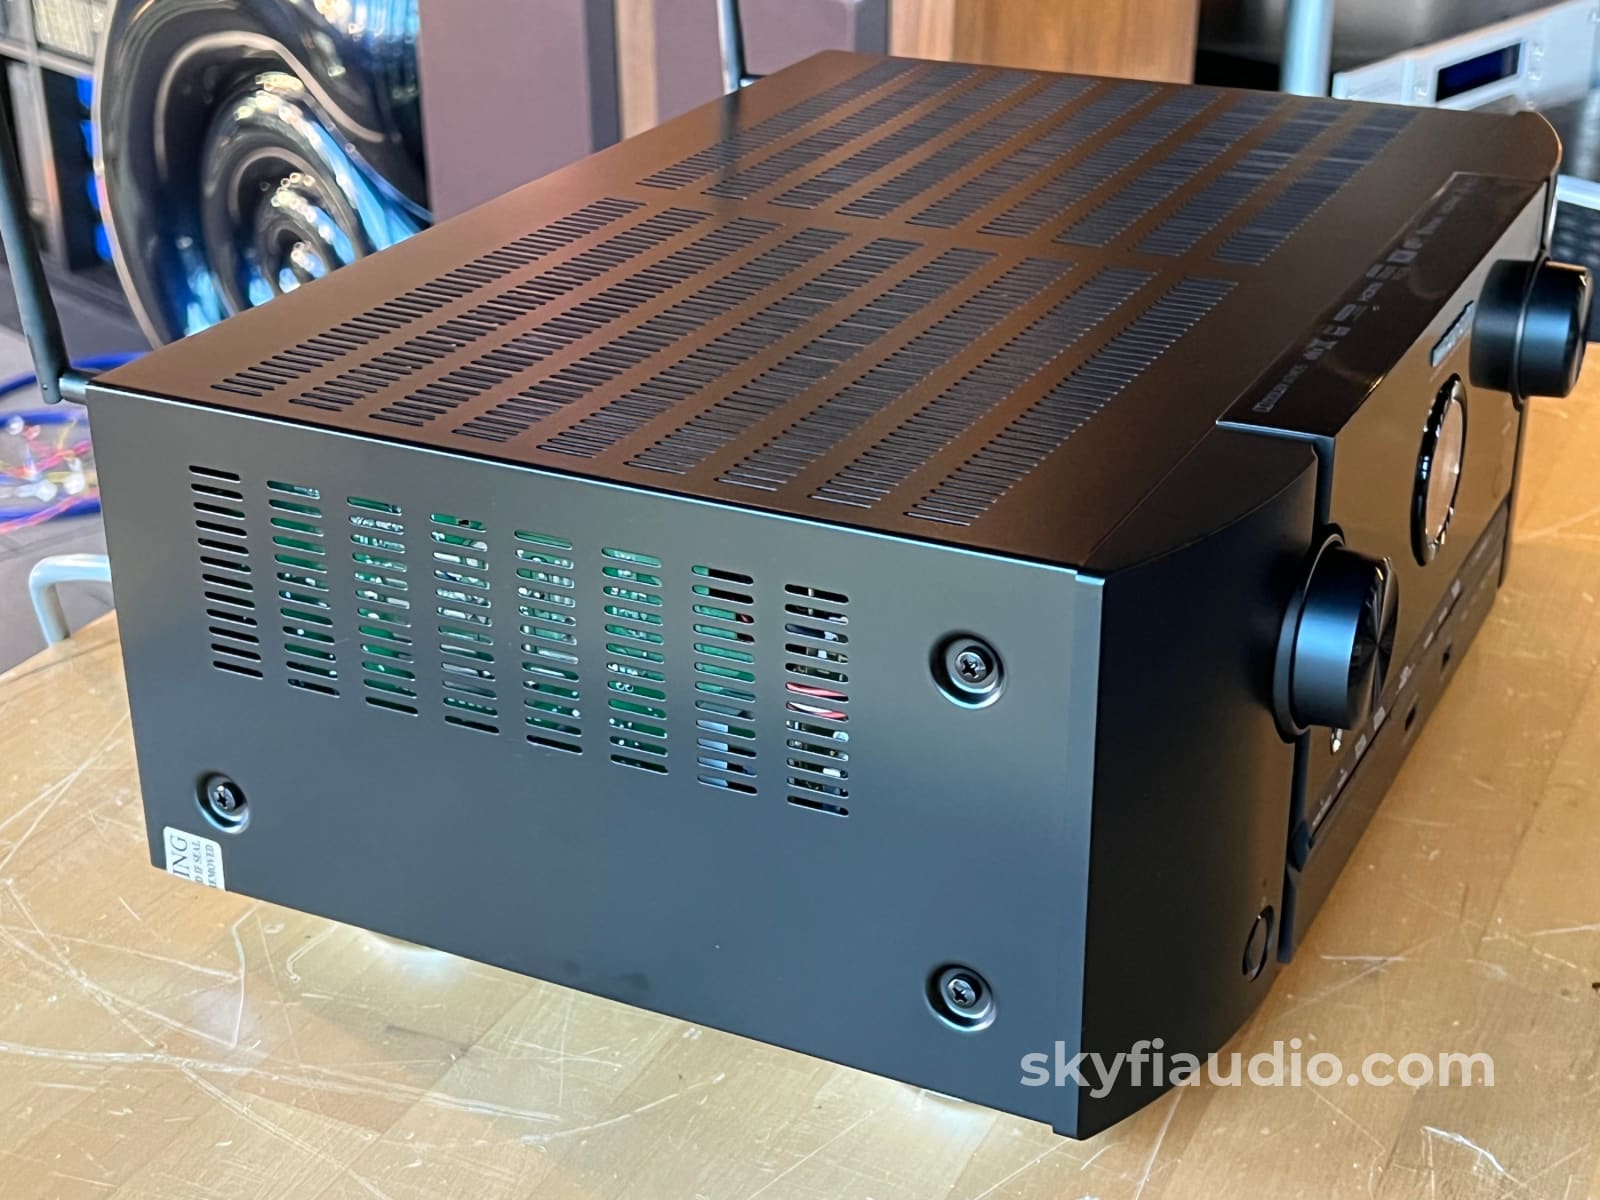 Marantz Sr5014 Av Receiver - 7.2 Channels Ultra Hd 4K Dolby Atmos And Vision Integrated Amplifier